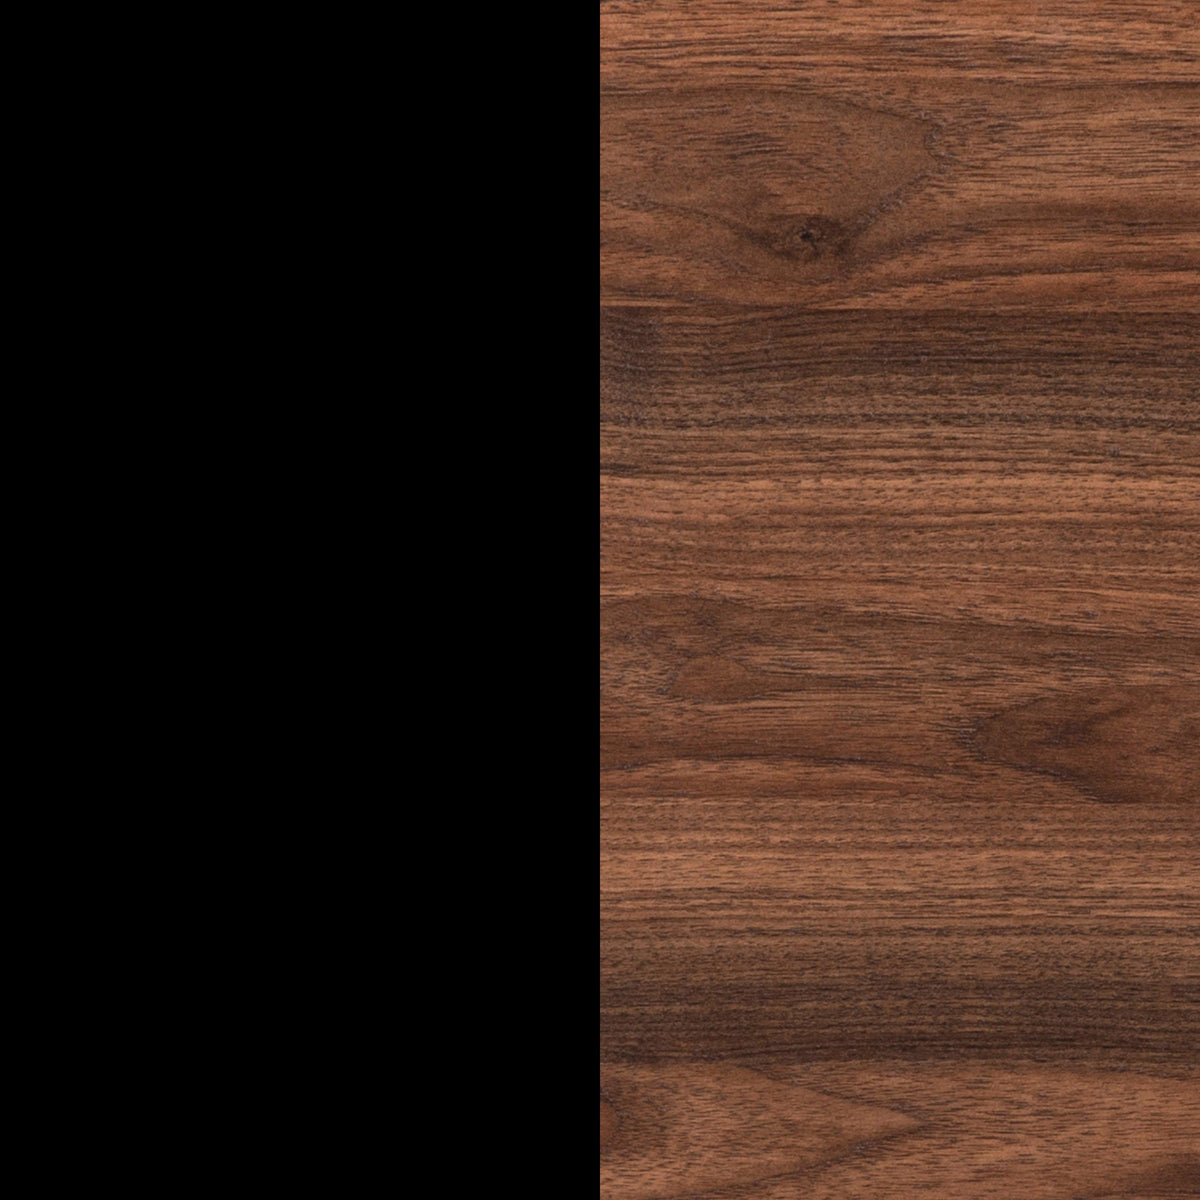 Walnut Top/Black Frame |#| Farmhouse Style Rustic Entryway Console Table - Black/Walnut Finish Top